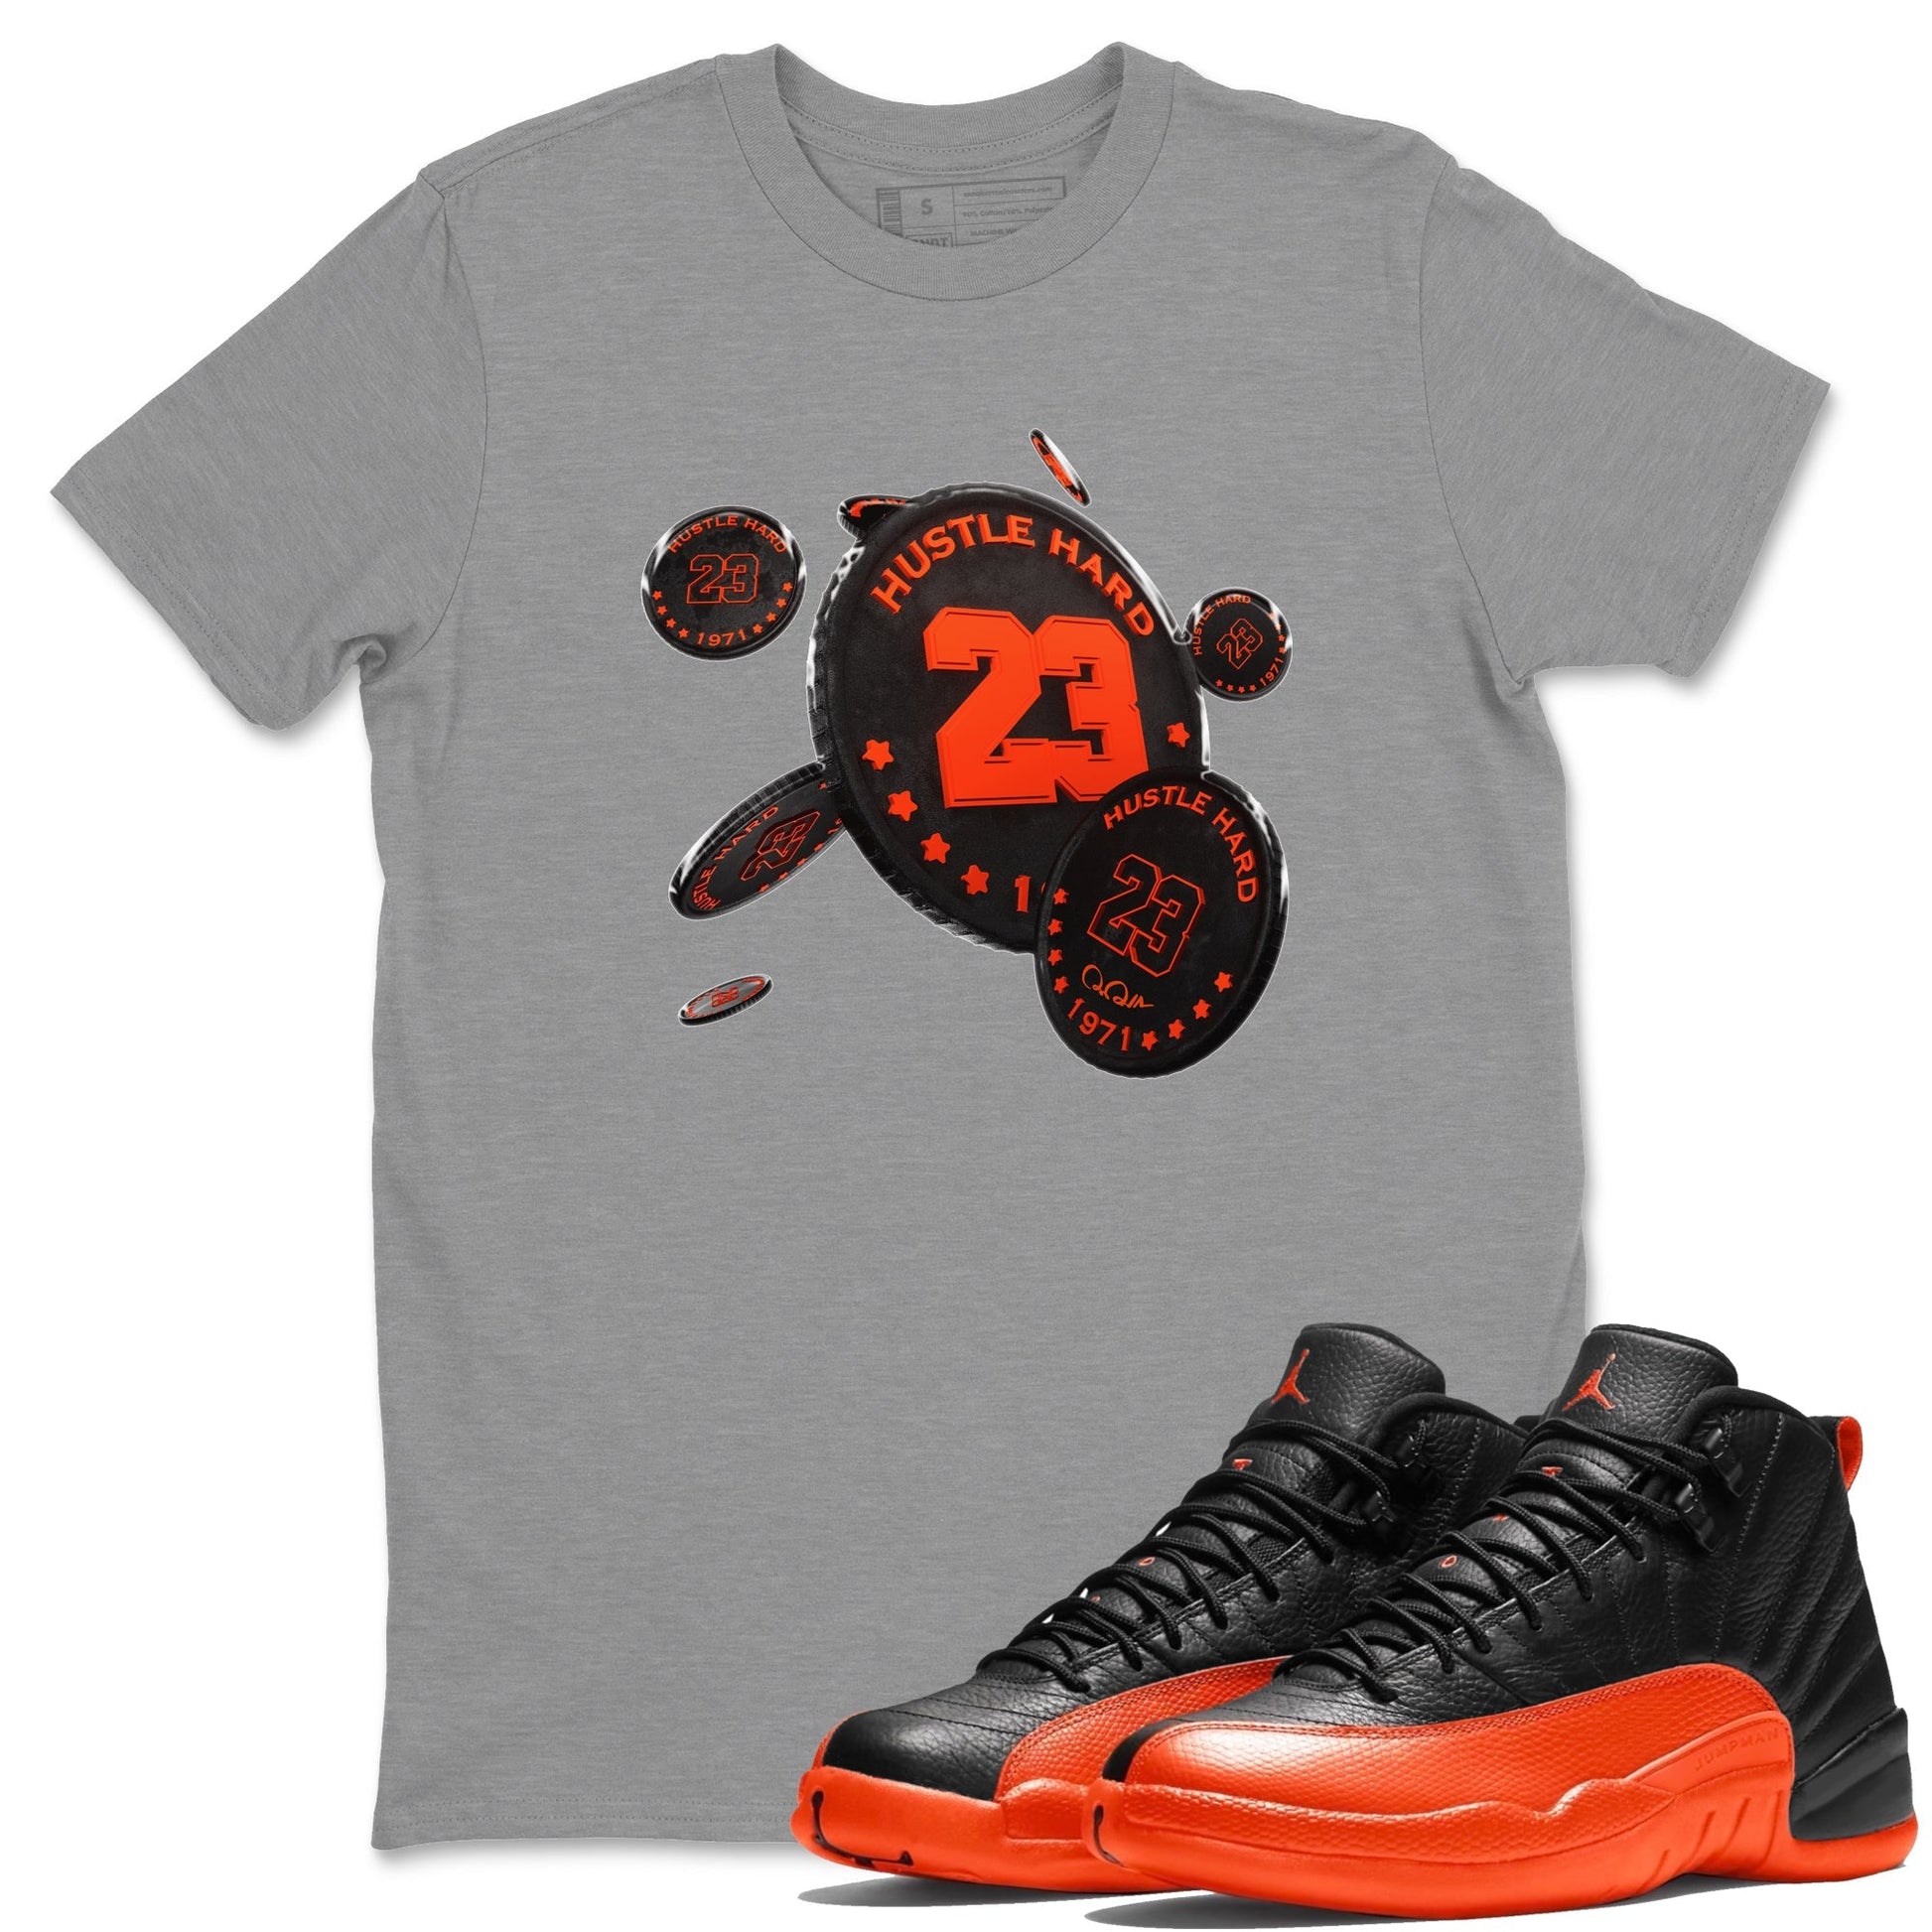 Air Jordan 12 Brilliant Orange Sneaker Match Tees Coin Drop Sneaker Tees AJ12 Brilliant Orange Sneaker Release Tees Unisex Shirts Heather Grey 1